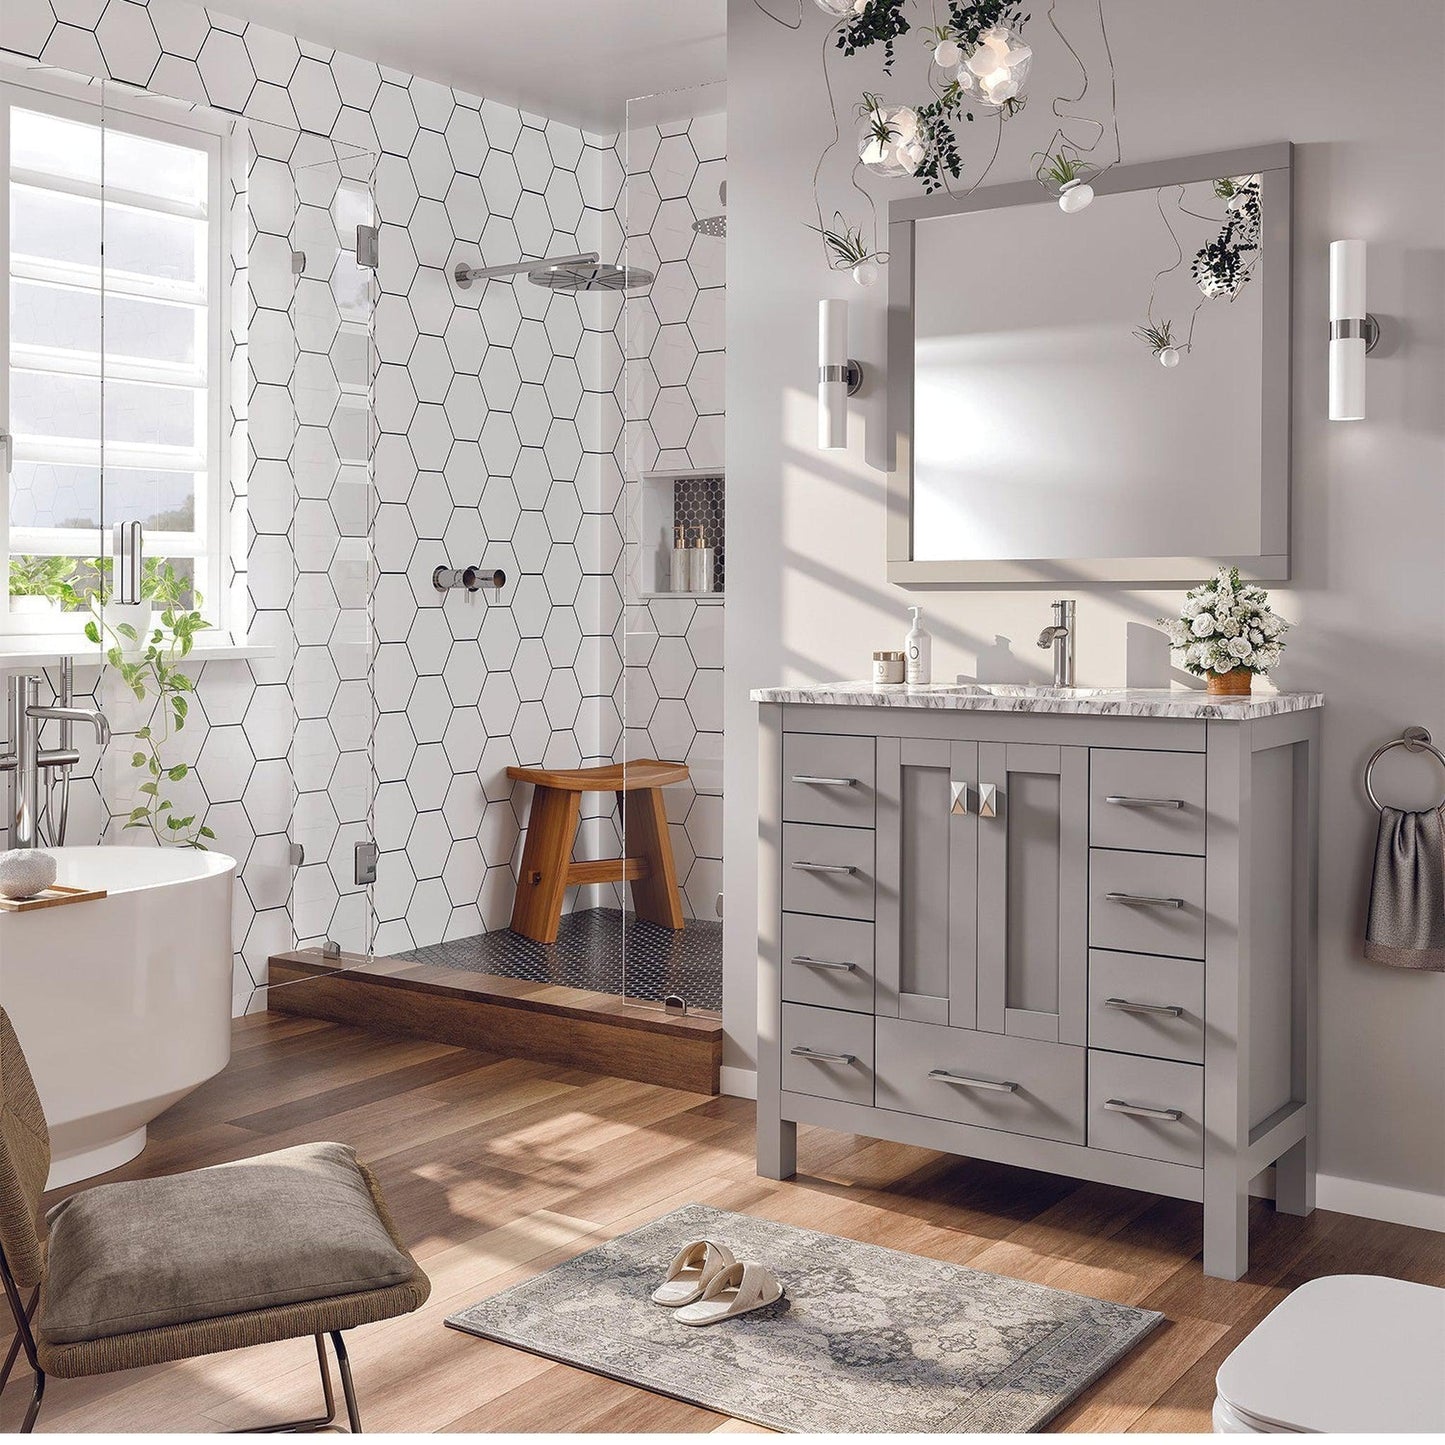 Eviva Hampton 36" x 34" in 18" Depth Gray Freestanding Bathroom Vanity With Marble Carrara Countertop and Single Undermount Sink